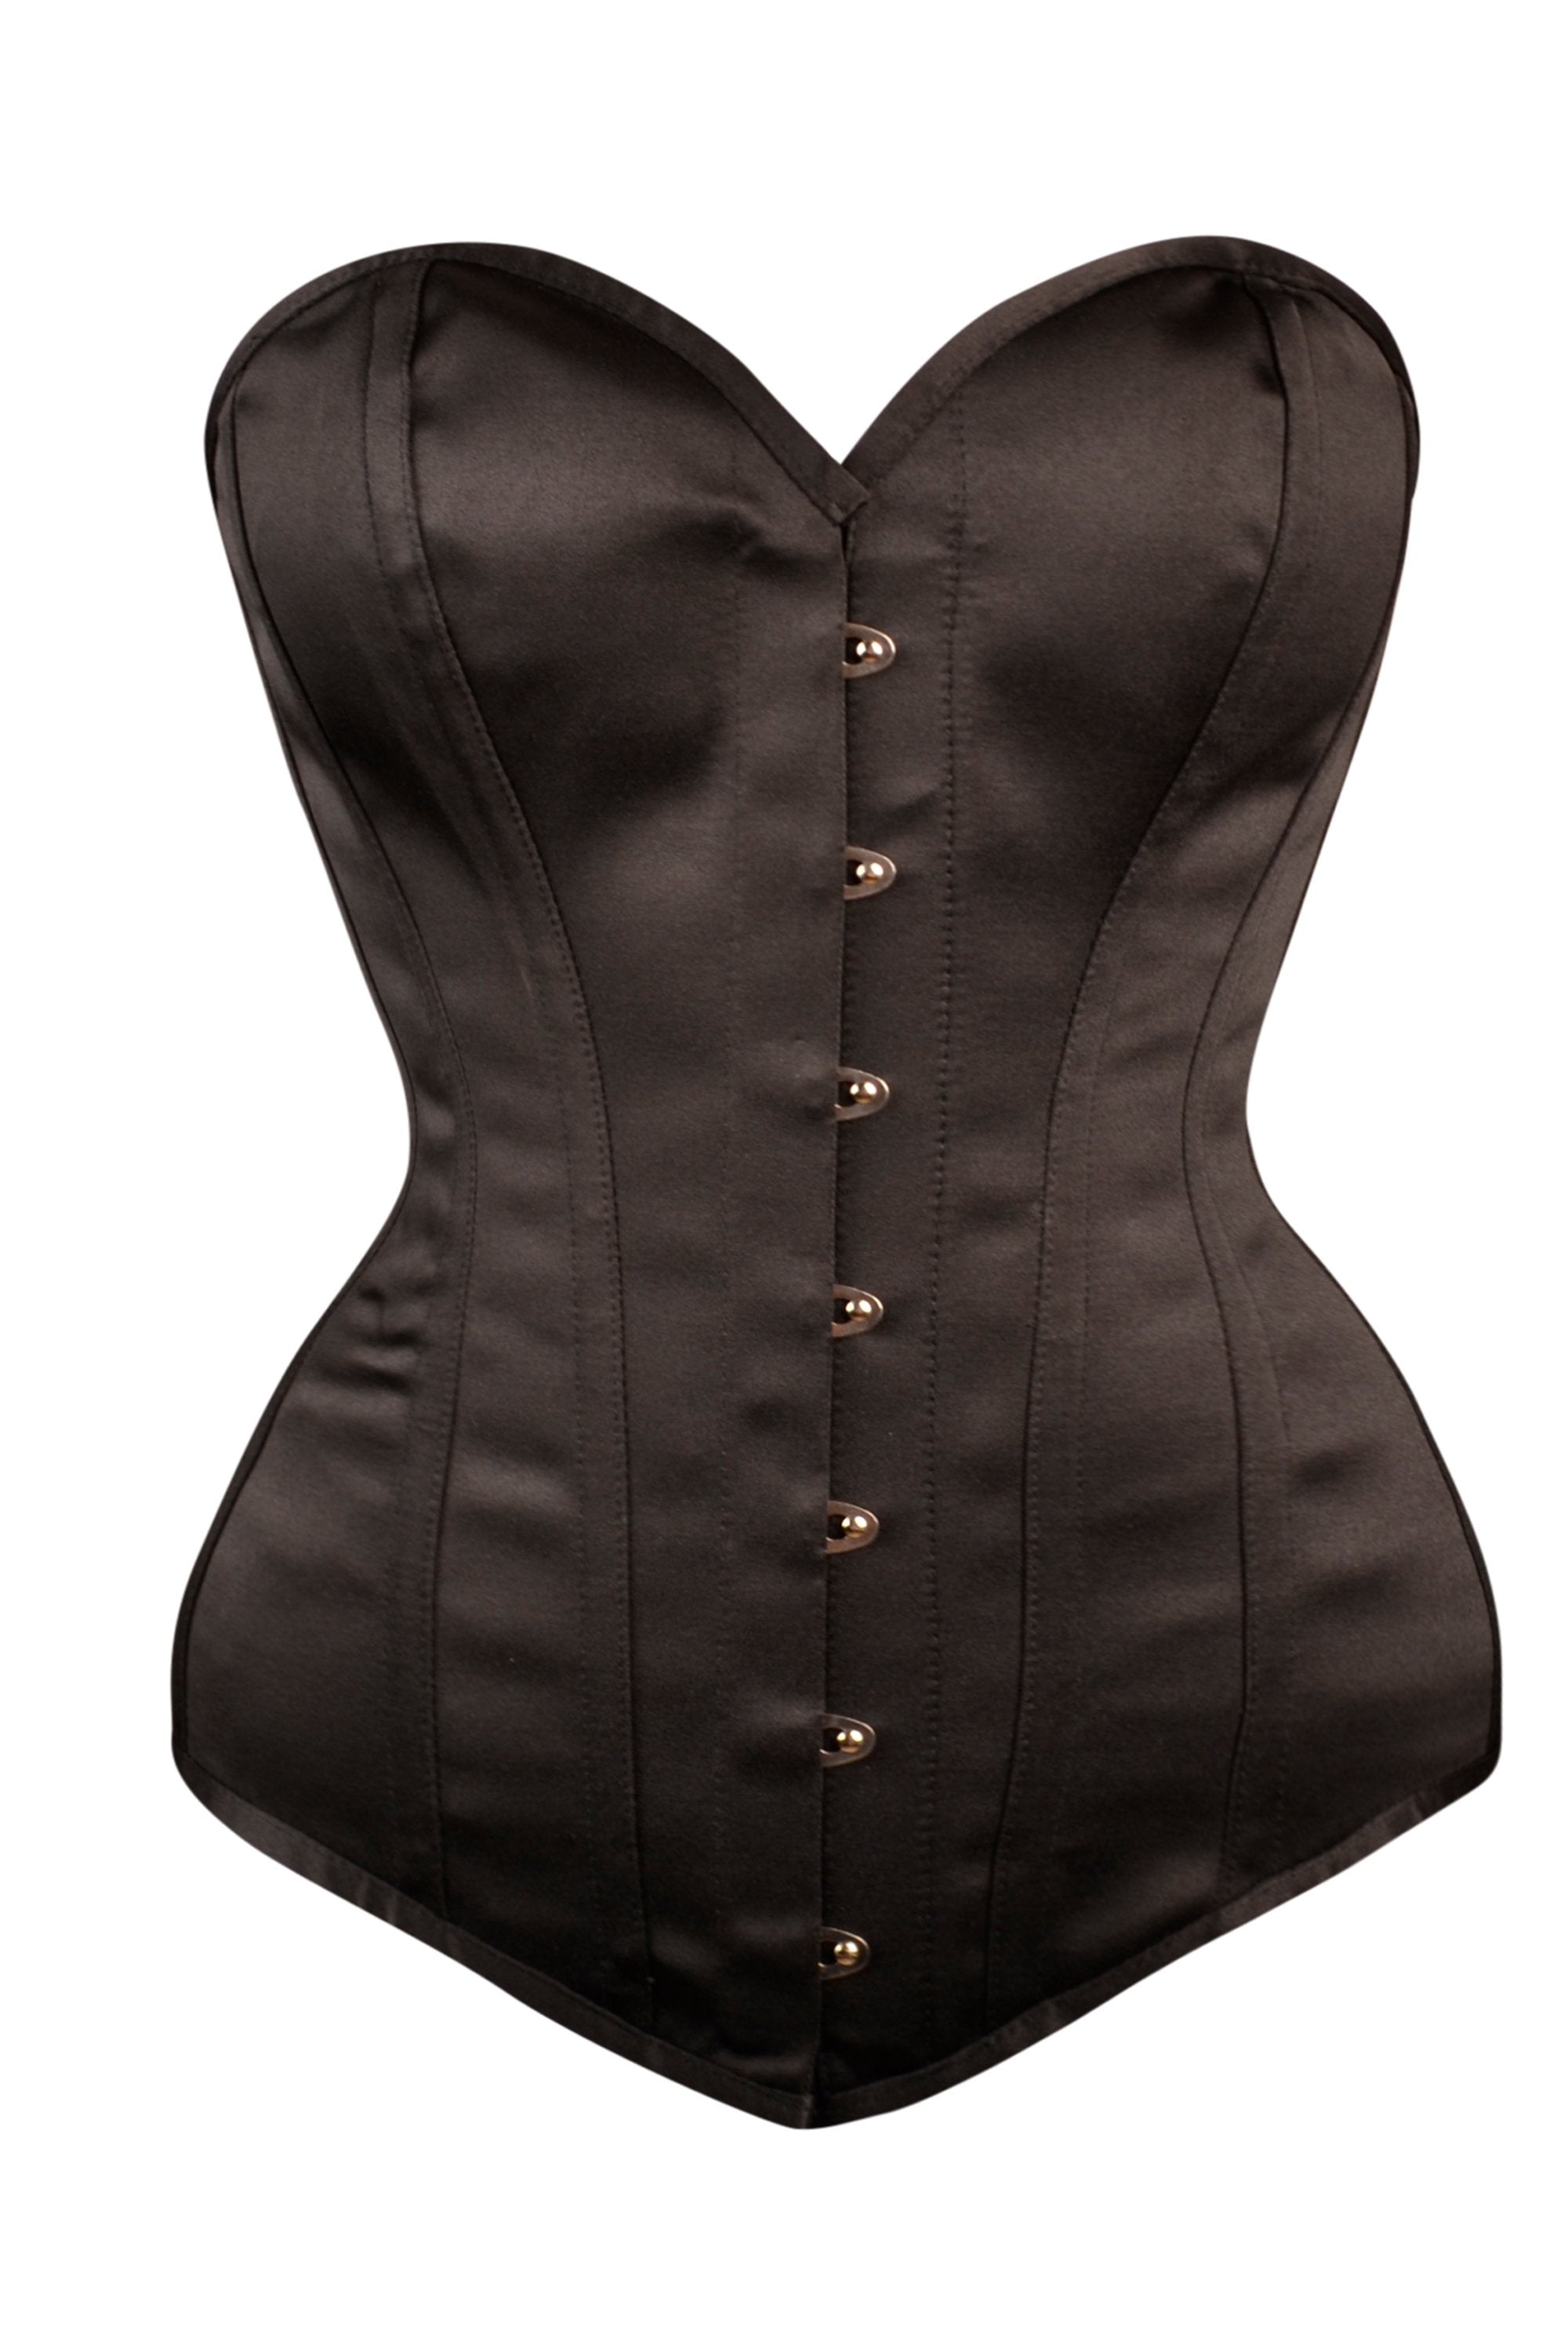 Black Satin overbust corset